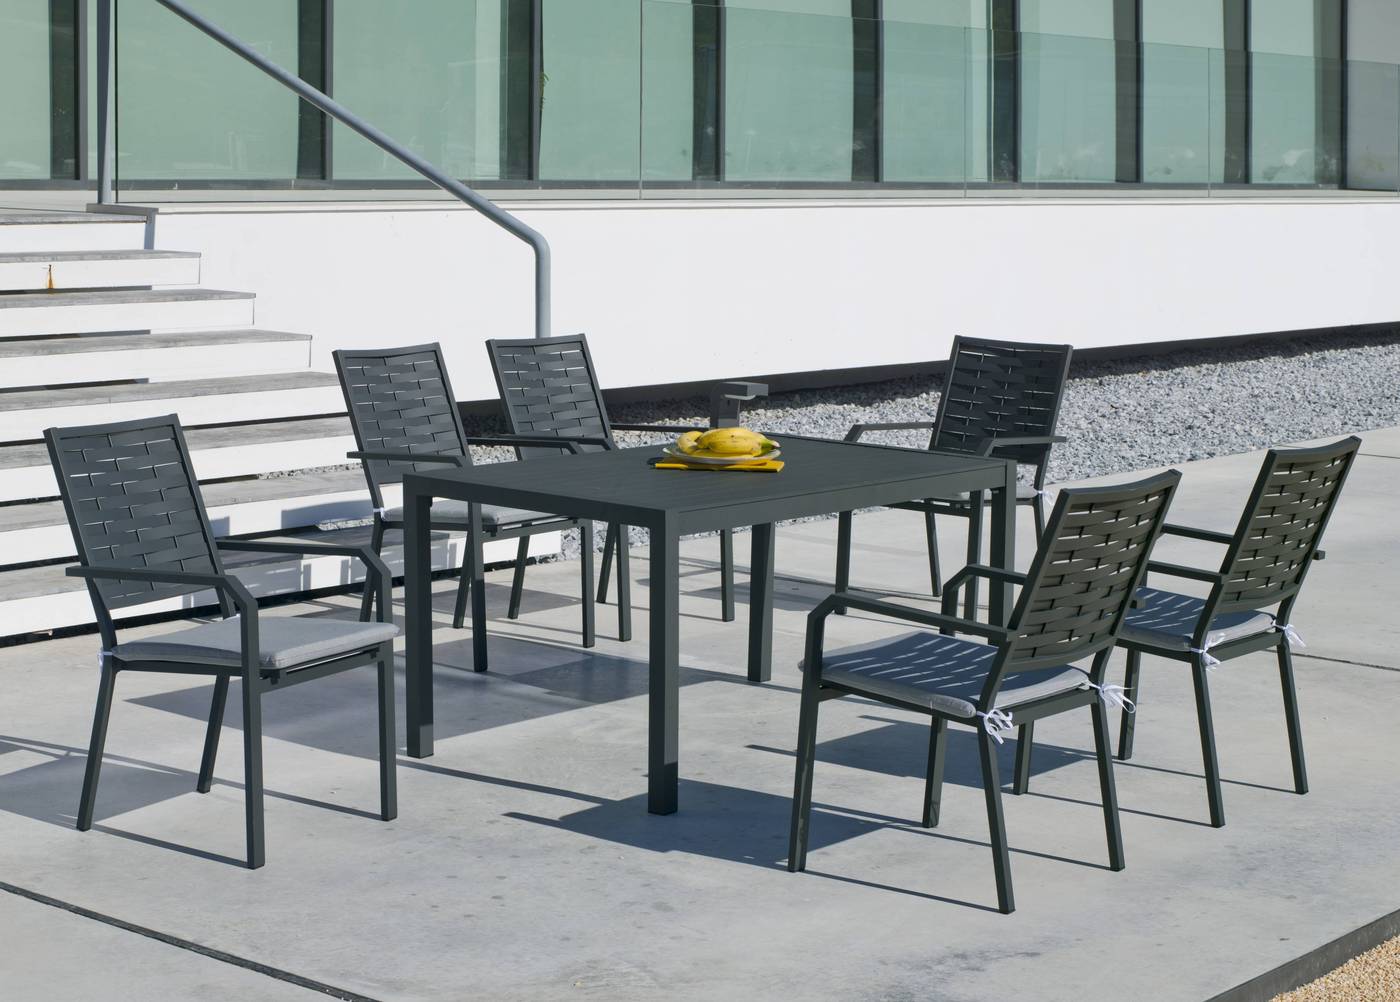 Set Aluminio Palma-Augusta 150-4 - Conjunto de aluminio luxe para jardín o terraza: Mesa rectangular 150 cm. + 4 sillones. Disponible en color blanco, bronce, antracita y champagne.